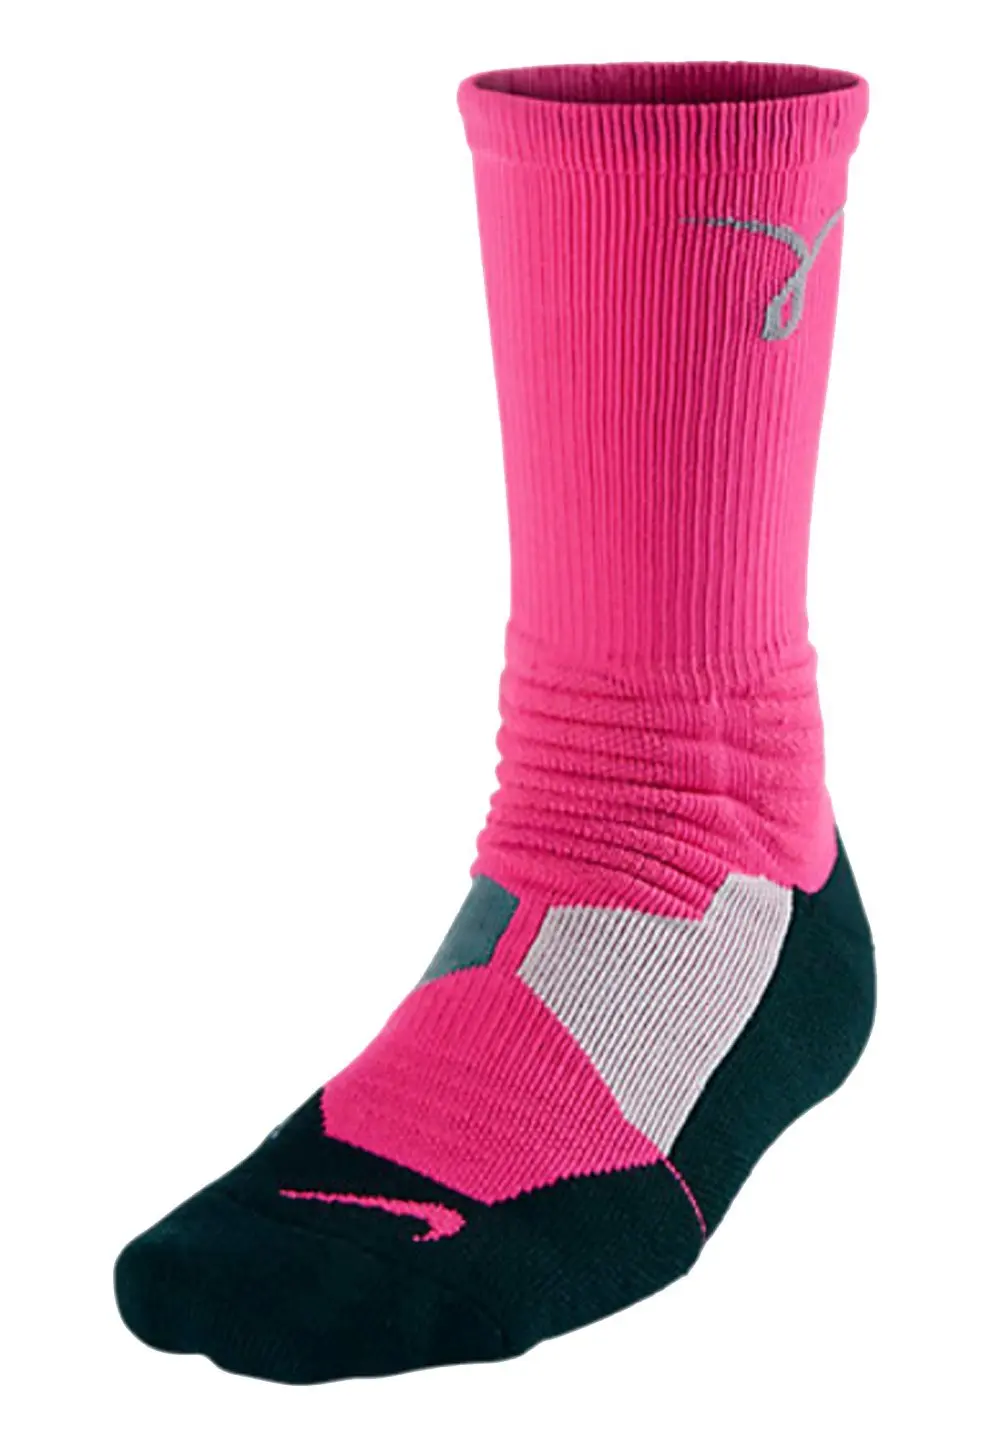 Cheap Elite Socks Black And Pink, find 